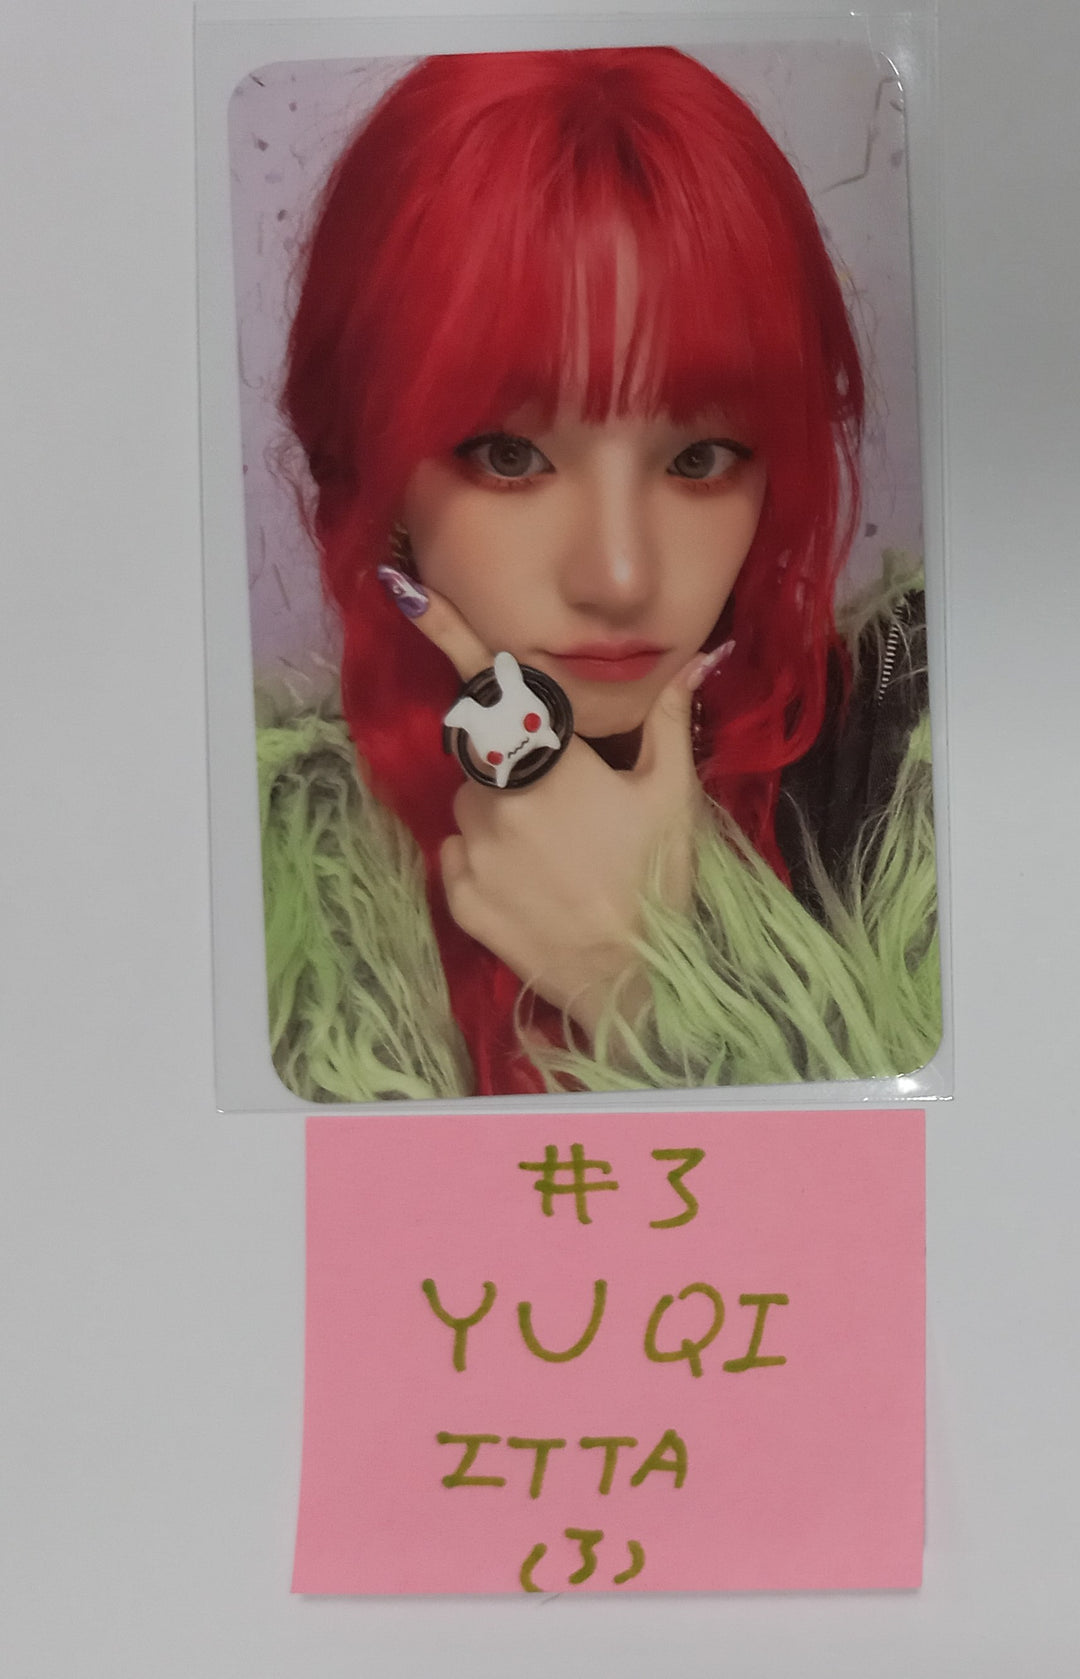 YUQI (Of (G) I-DLE) "YUQ1" - ITTA Pre-Order Benefit Photocard [24.4.30]